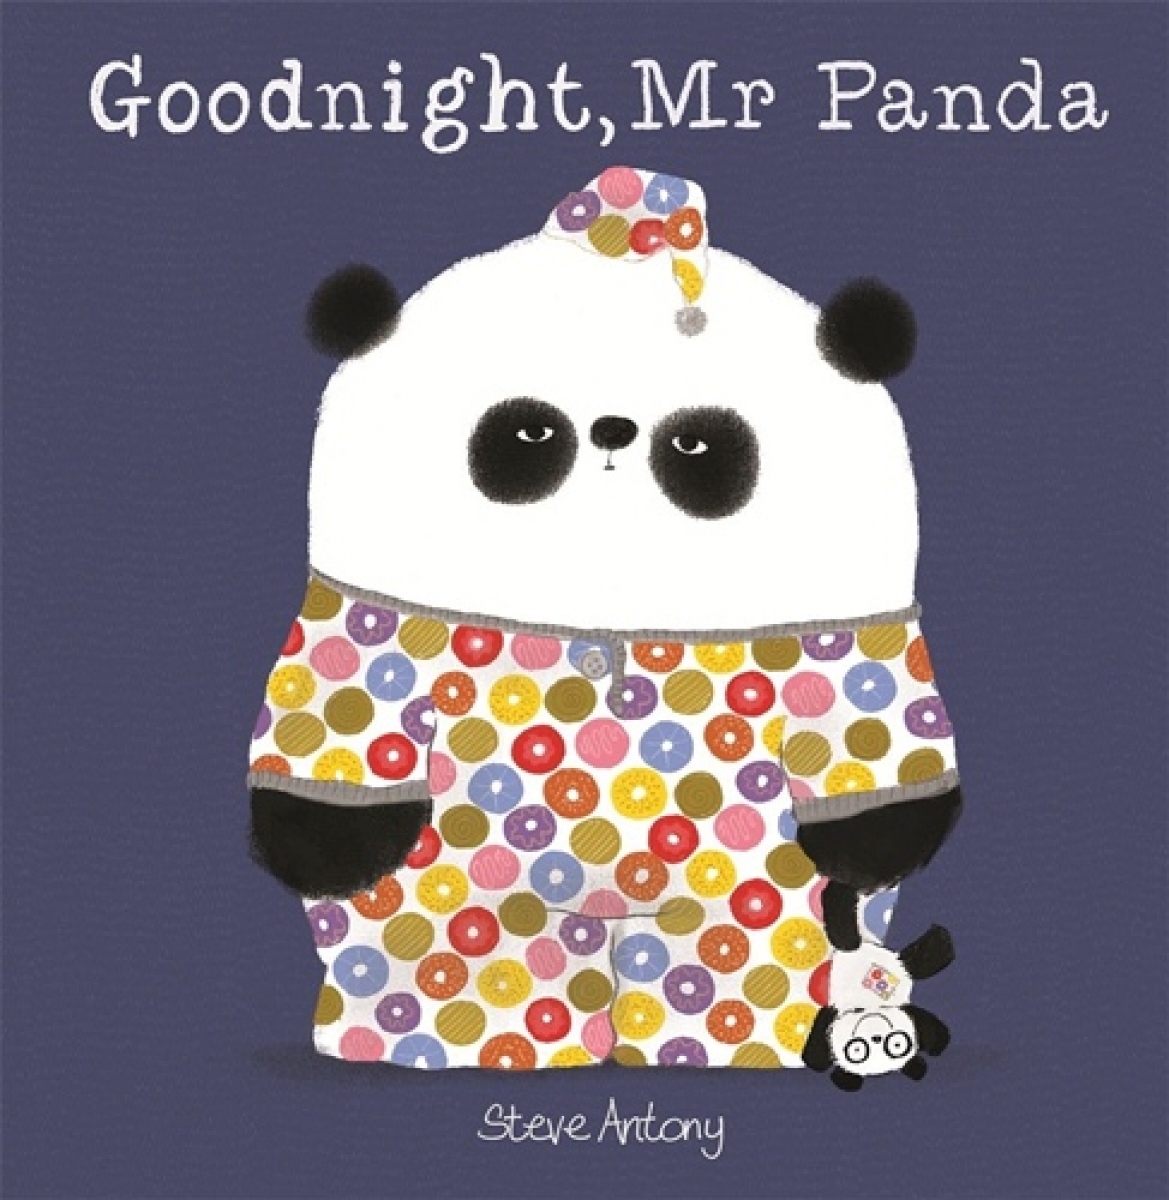 Antony Steve Goodnight, Mr Panda 